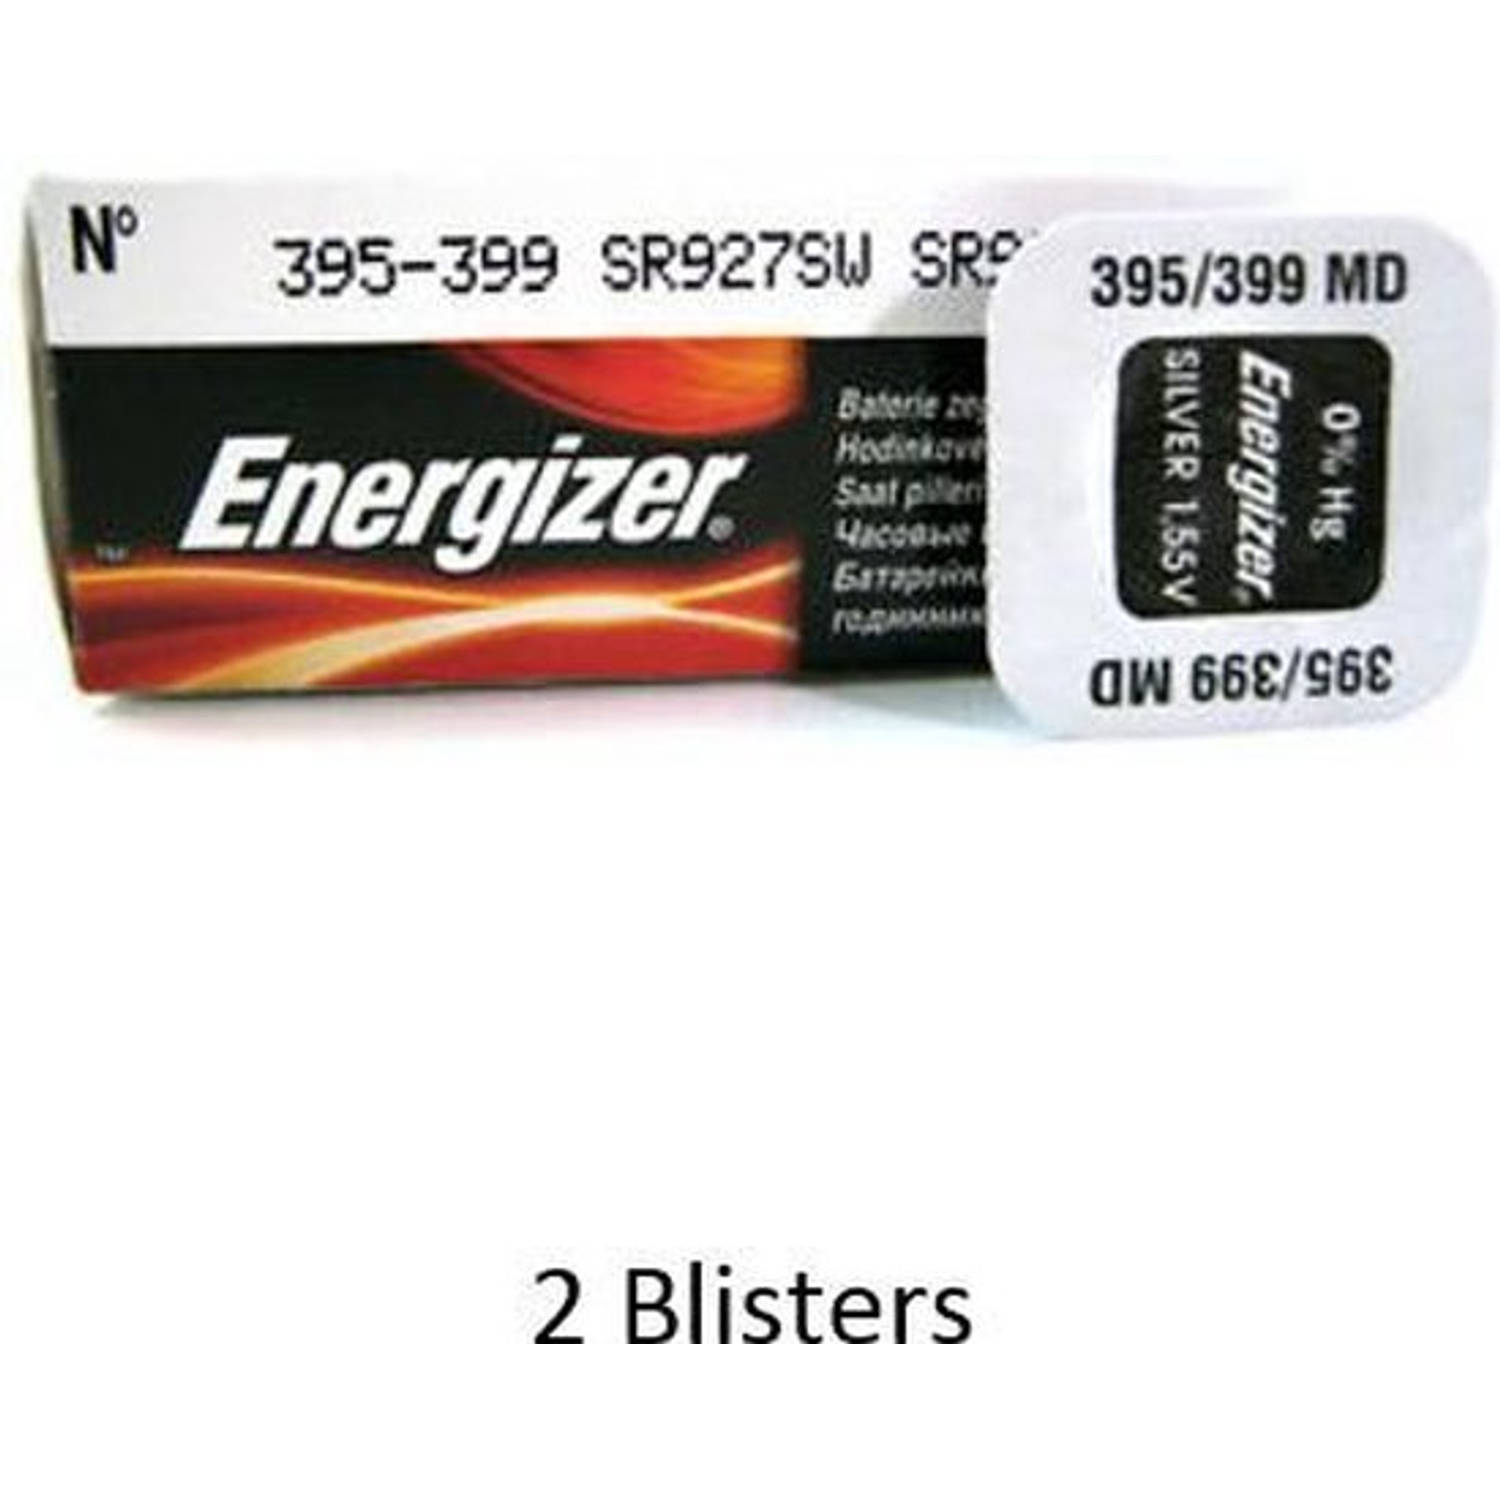 2 stuks (2 blisters a 1 stuk) Energizer 395 / 399 SR927SW 52mAh 1.55V knoopcel batterij